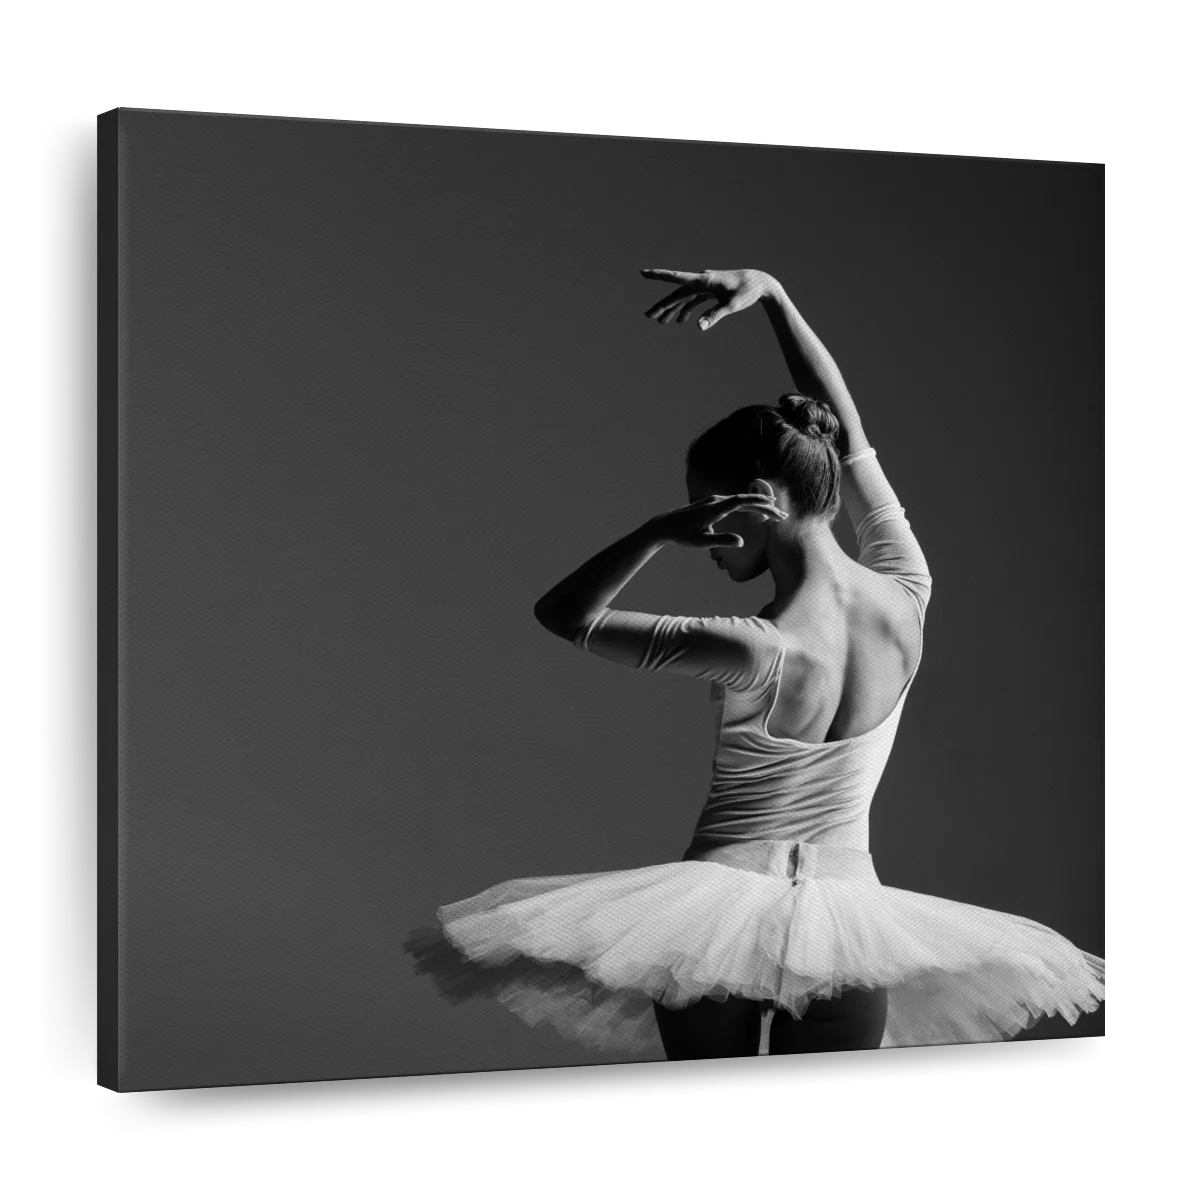 Beautiful ballerina | Ballet poses, Stock photography free, Stock photos